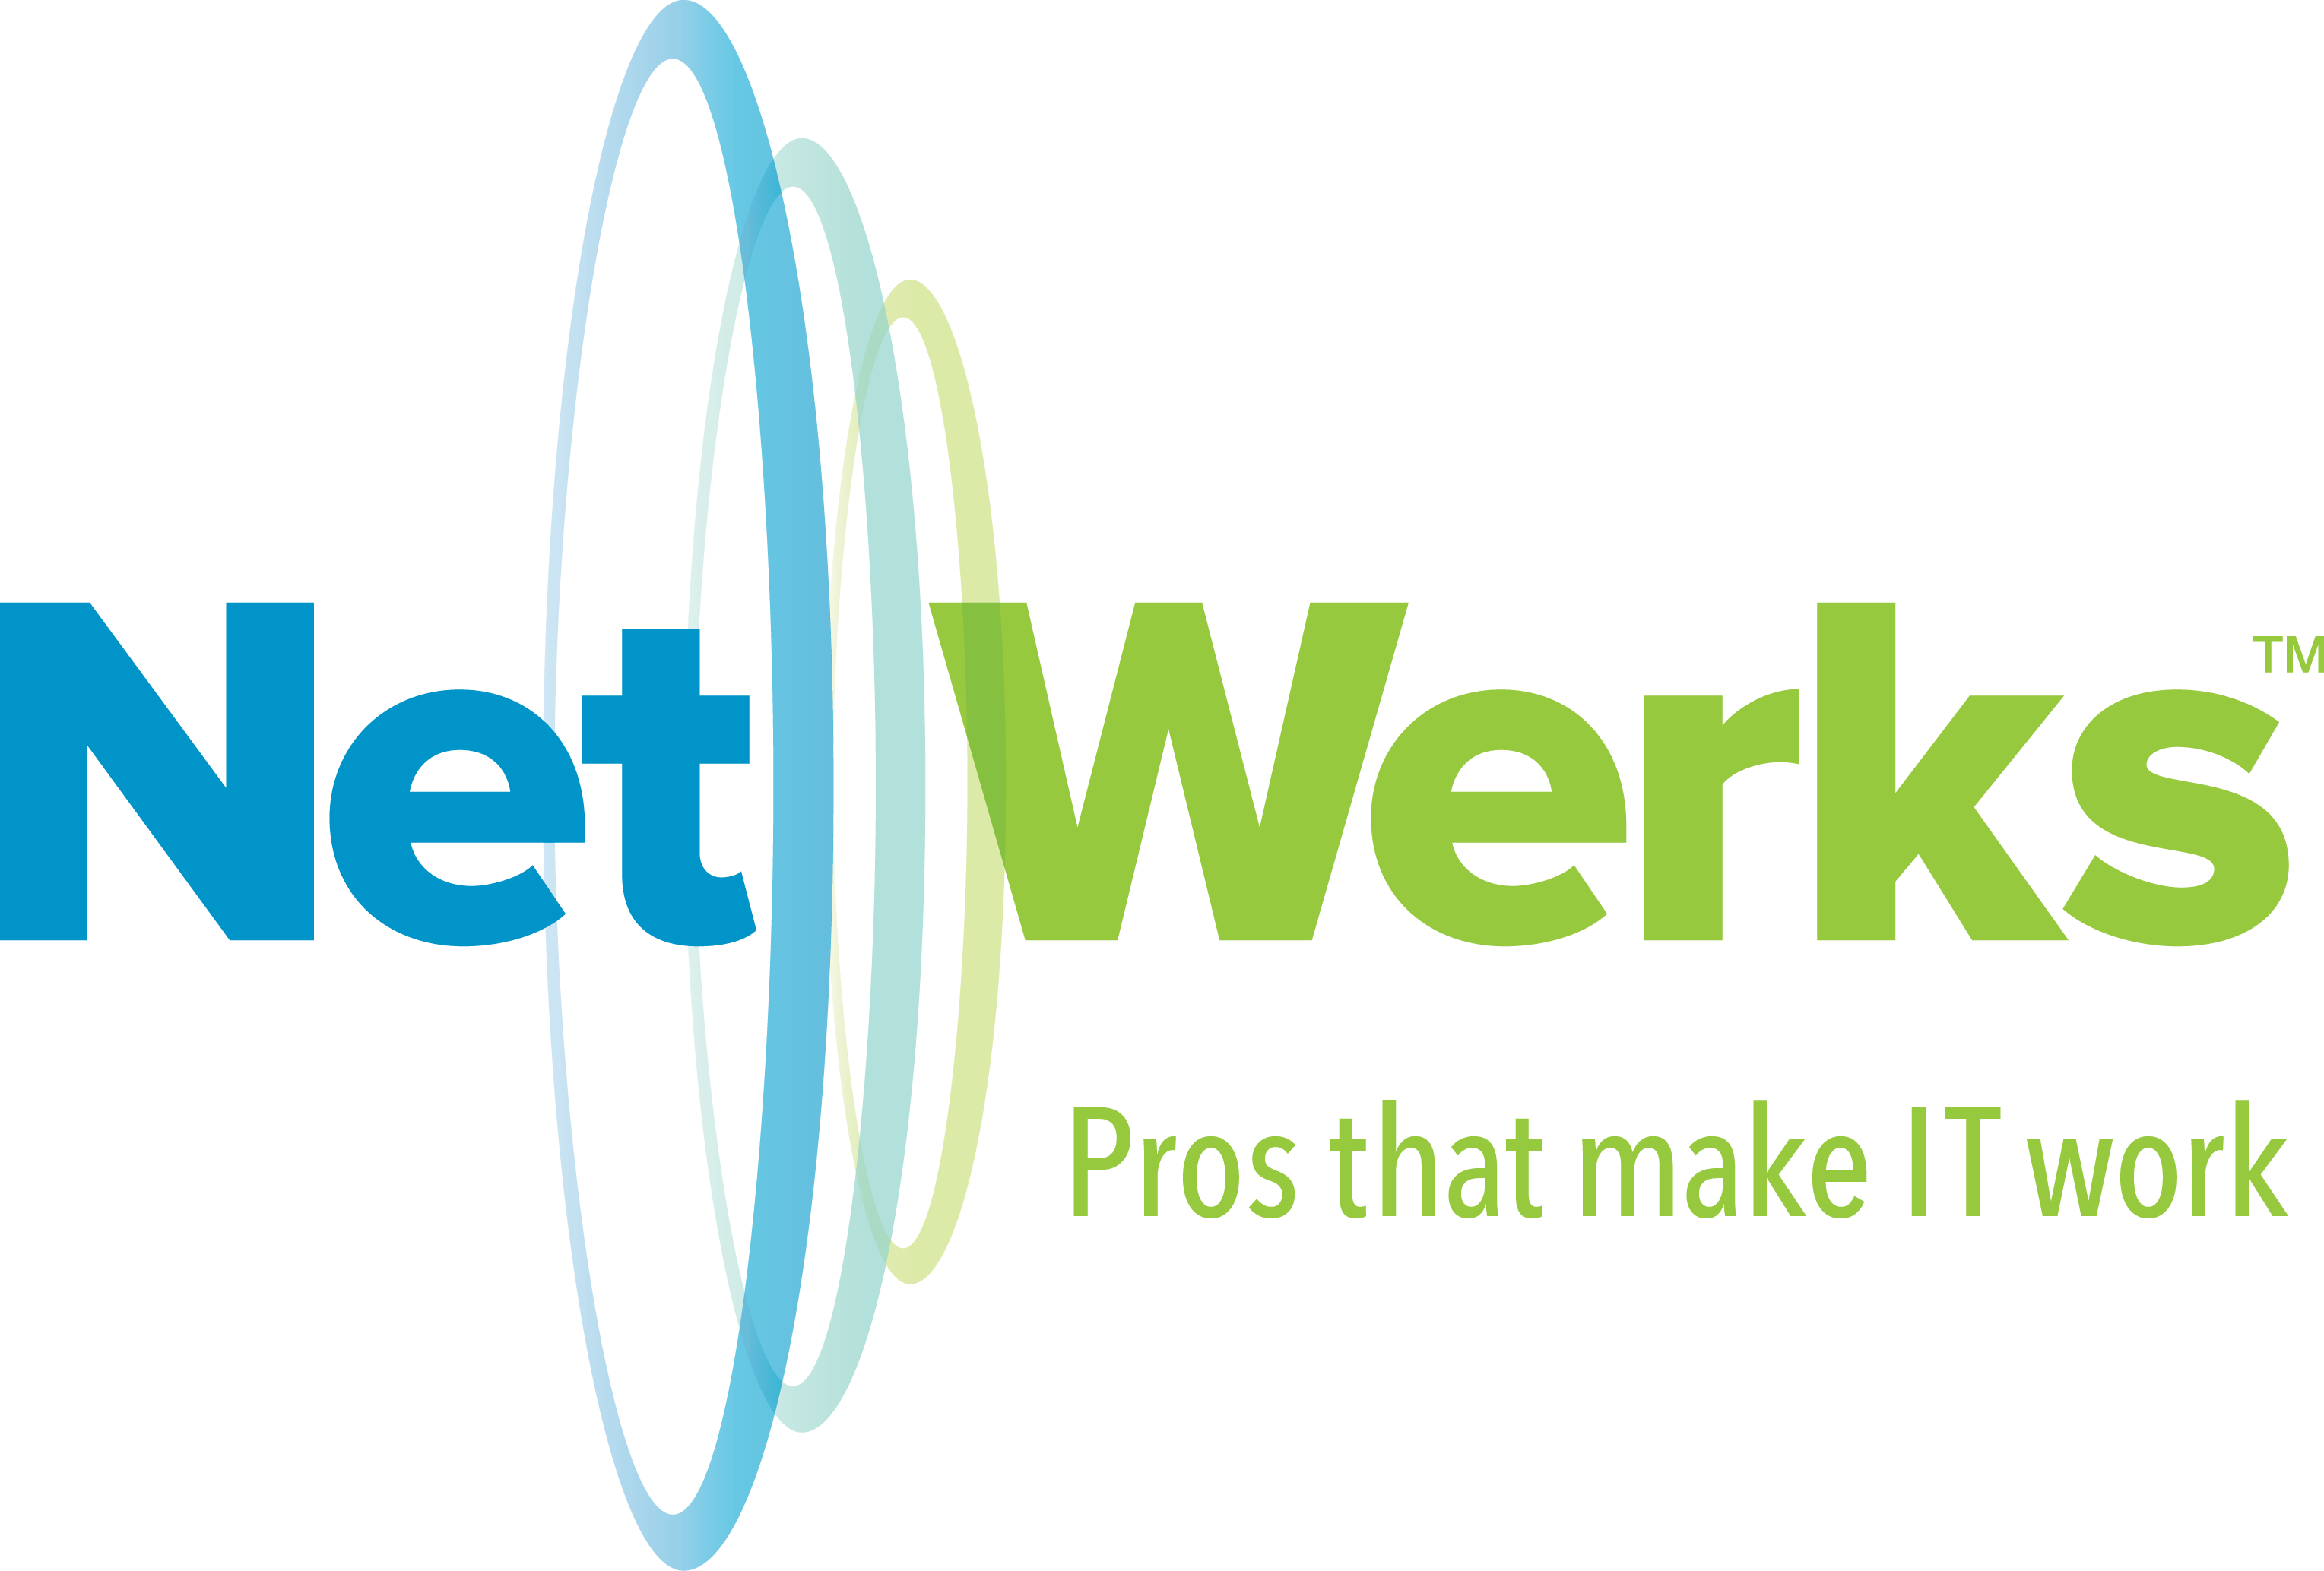 NetWerks Strategic Services, LLC